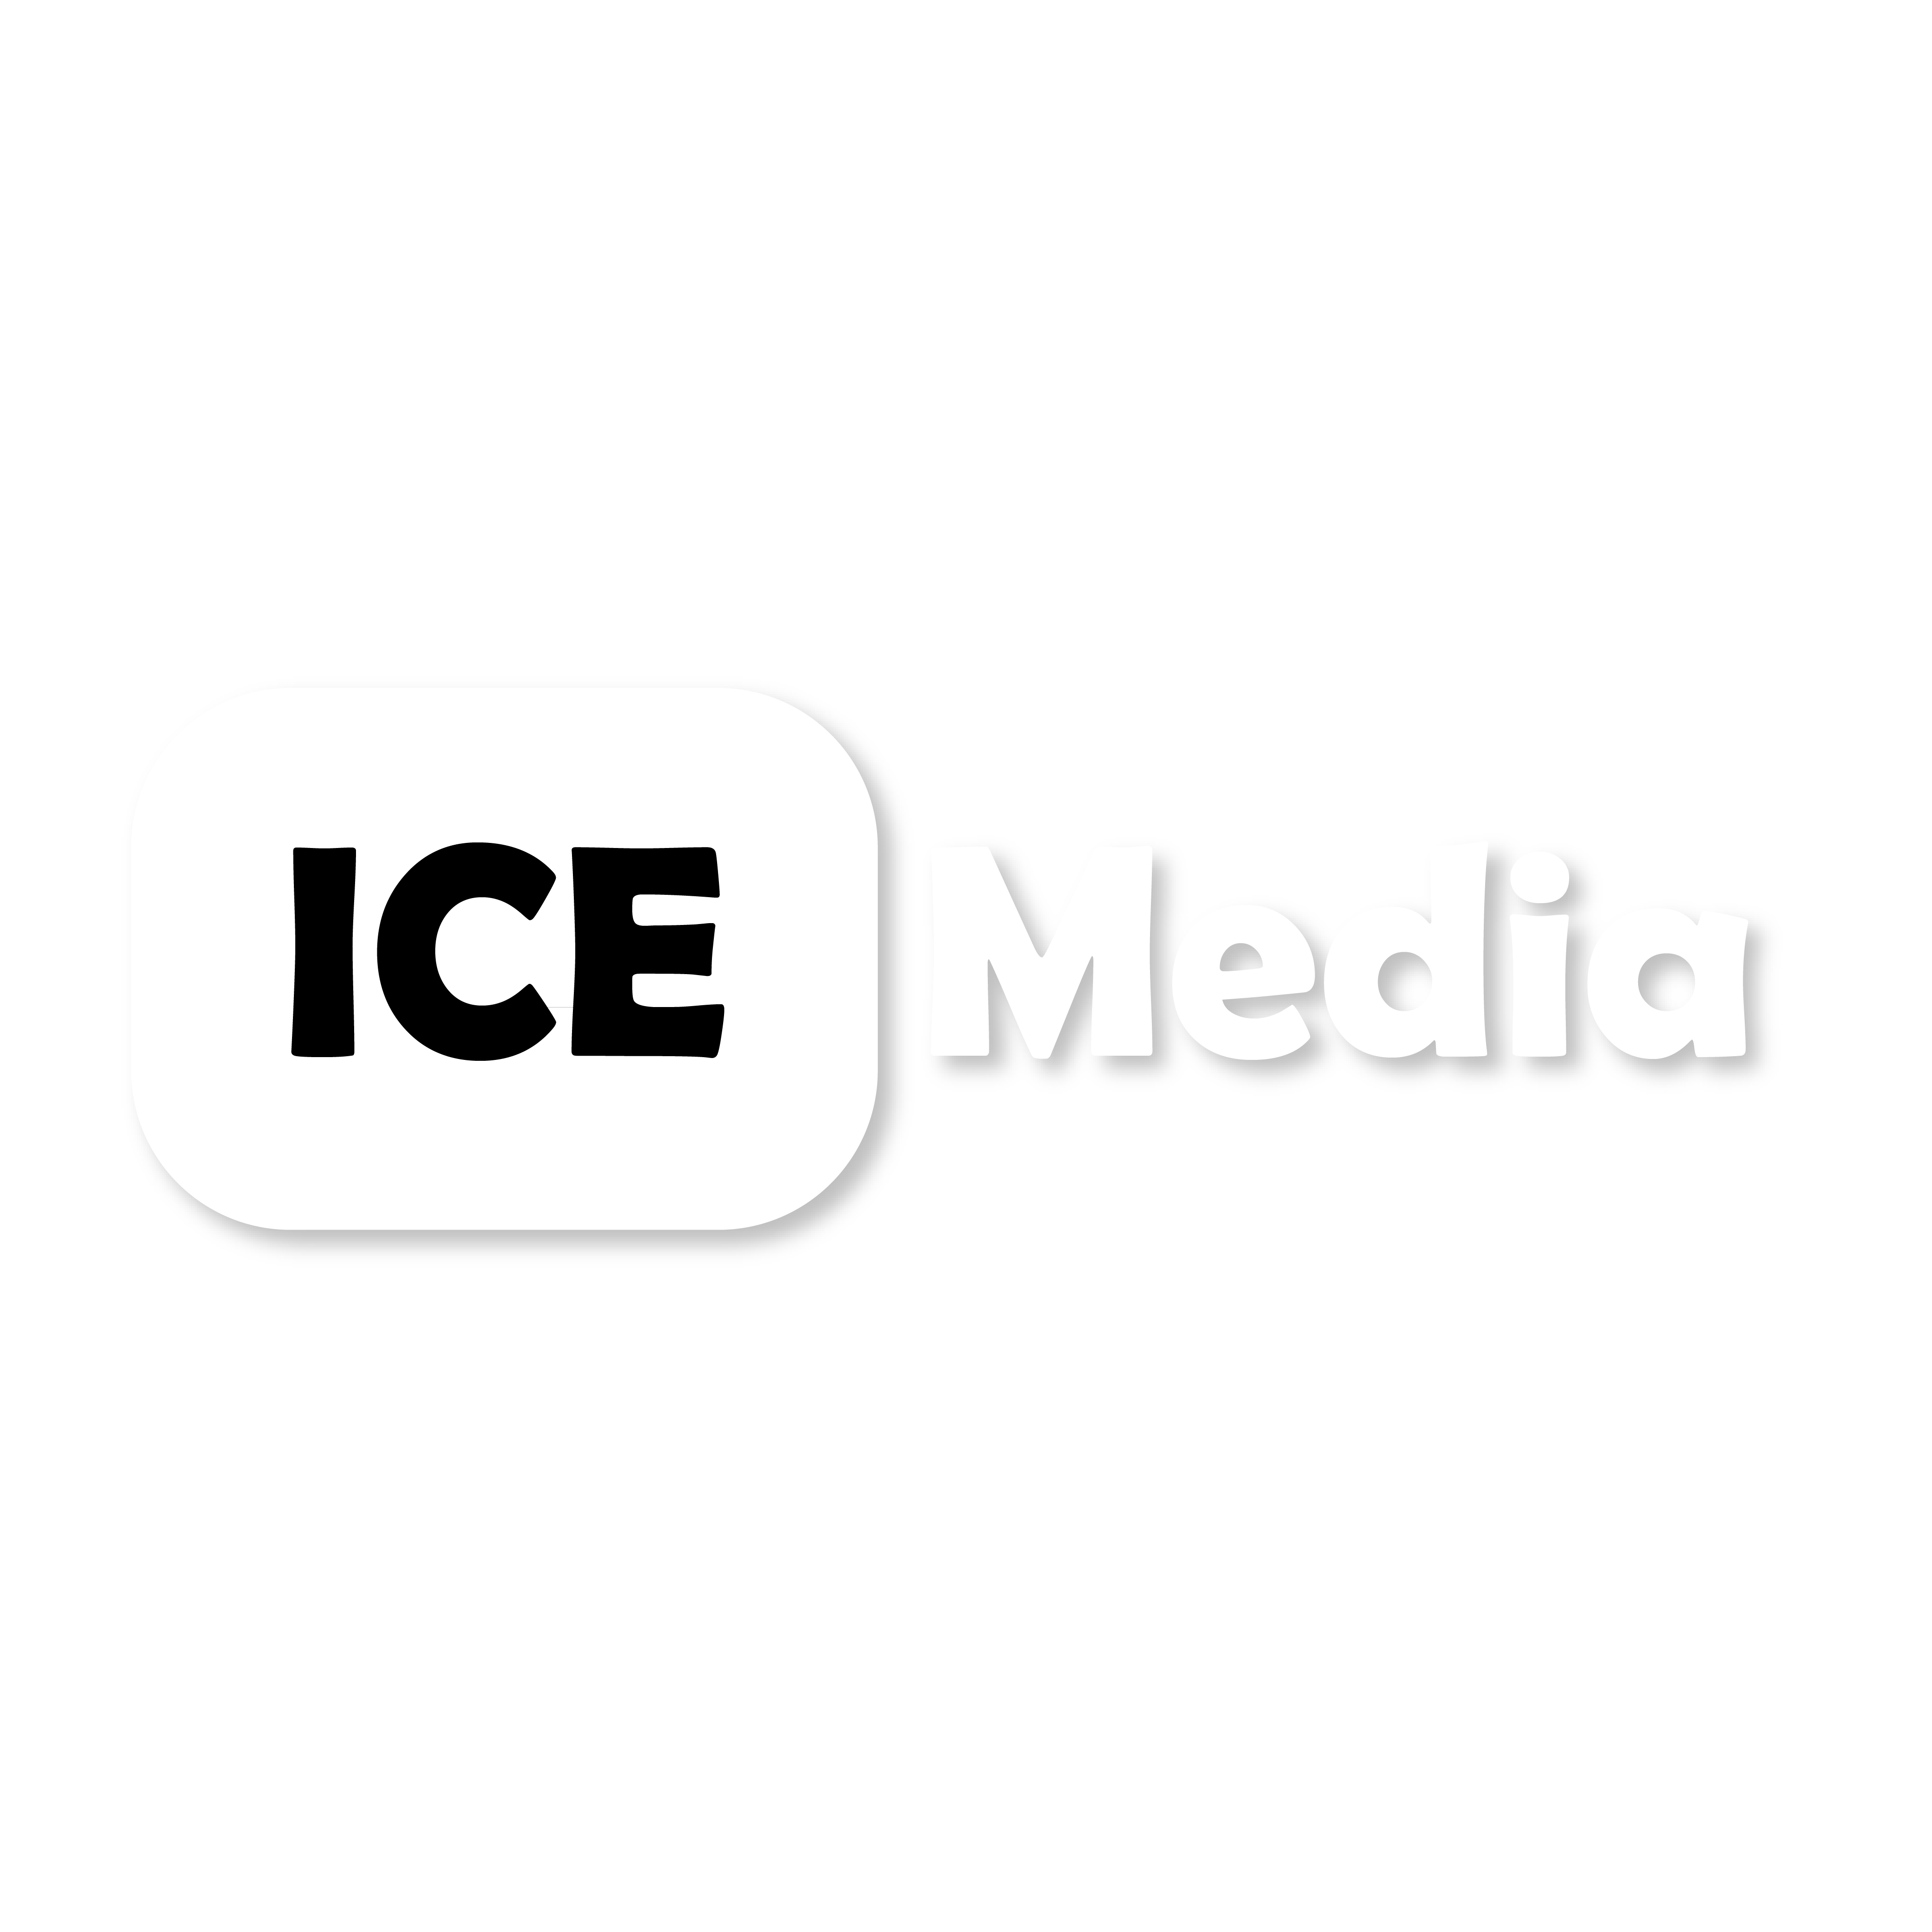 IceMedia